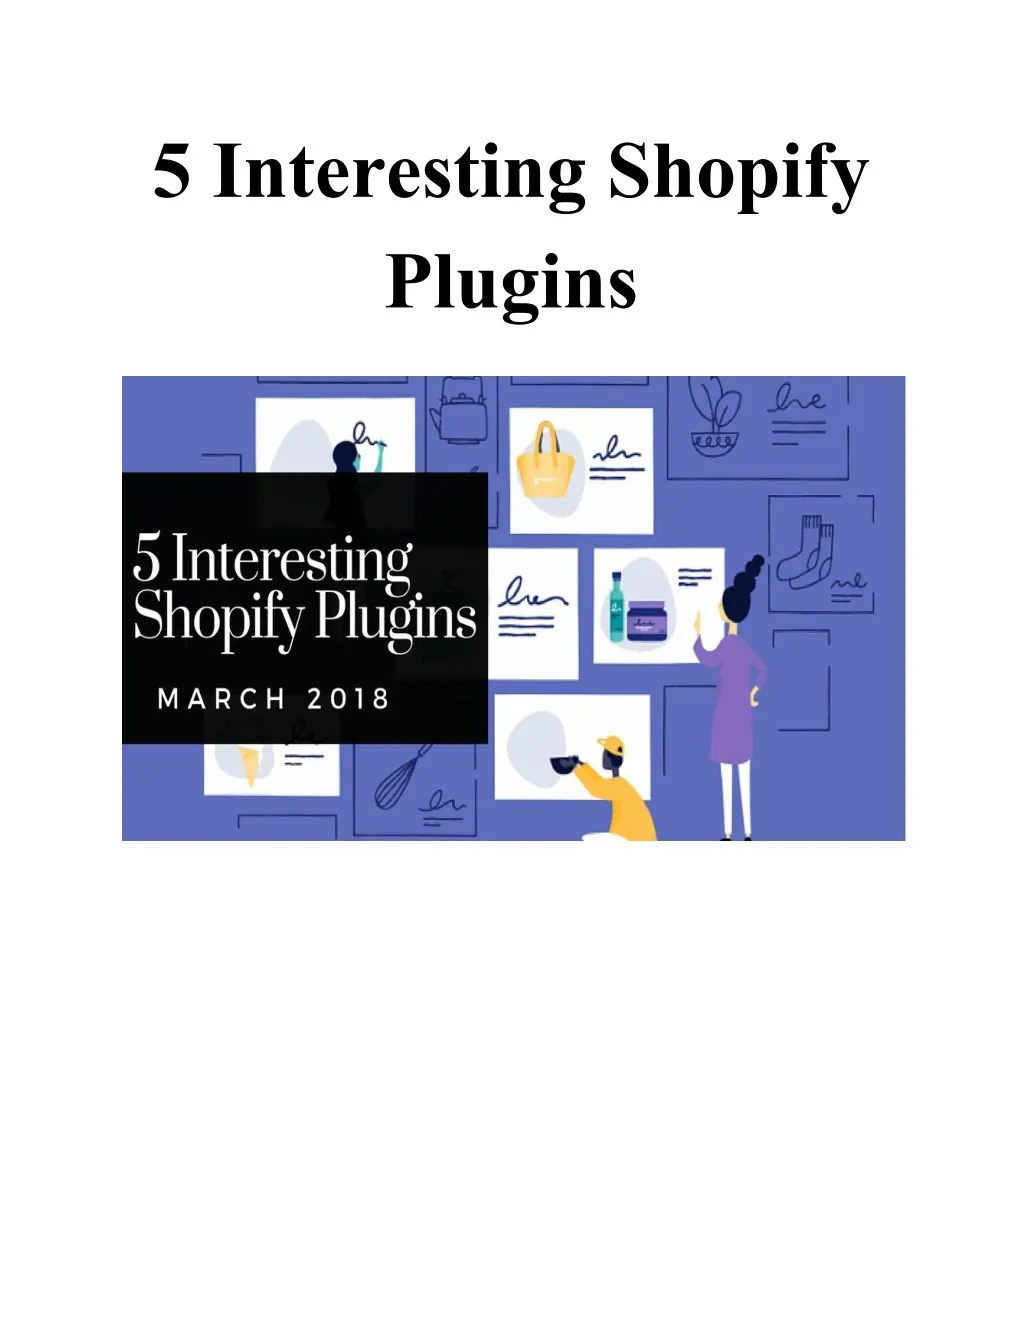 5 interesting shopify plugins